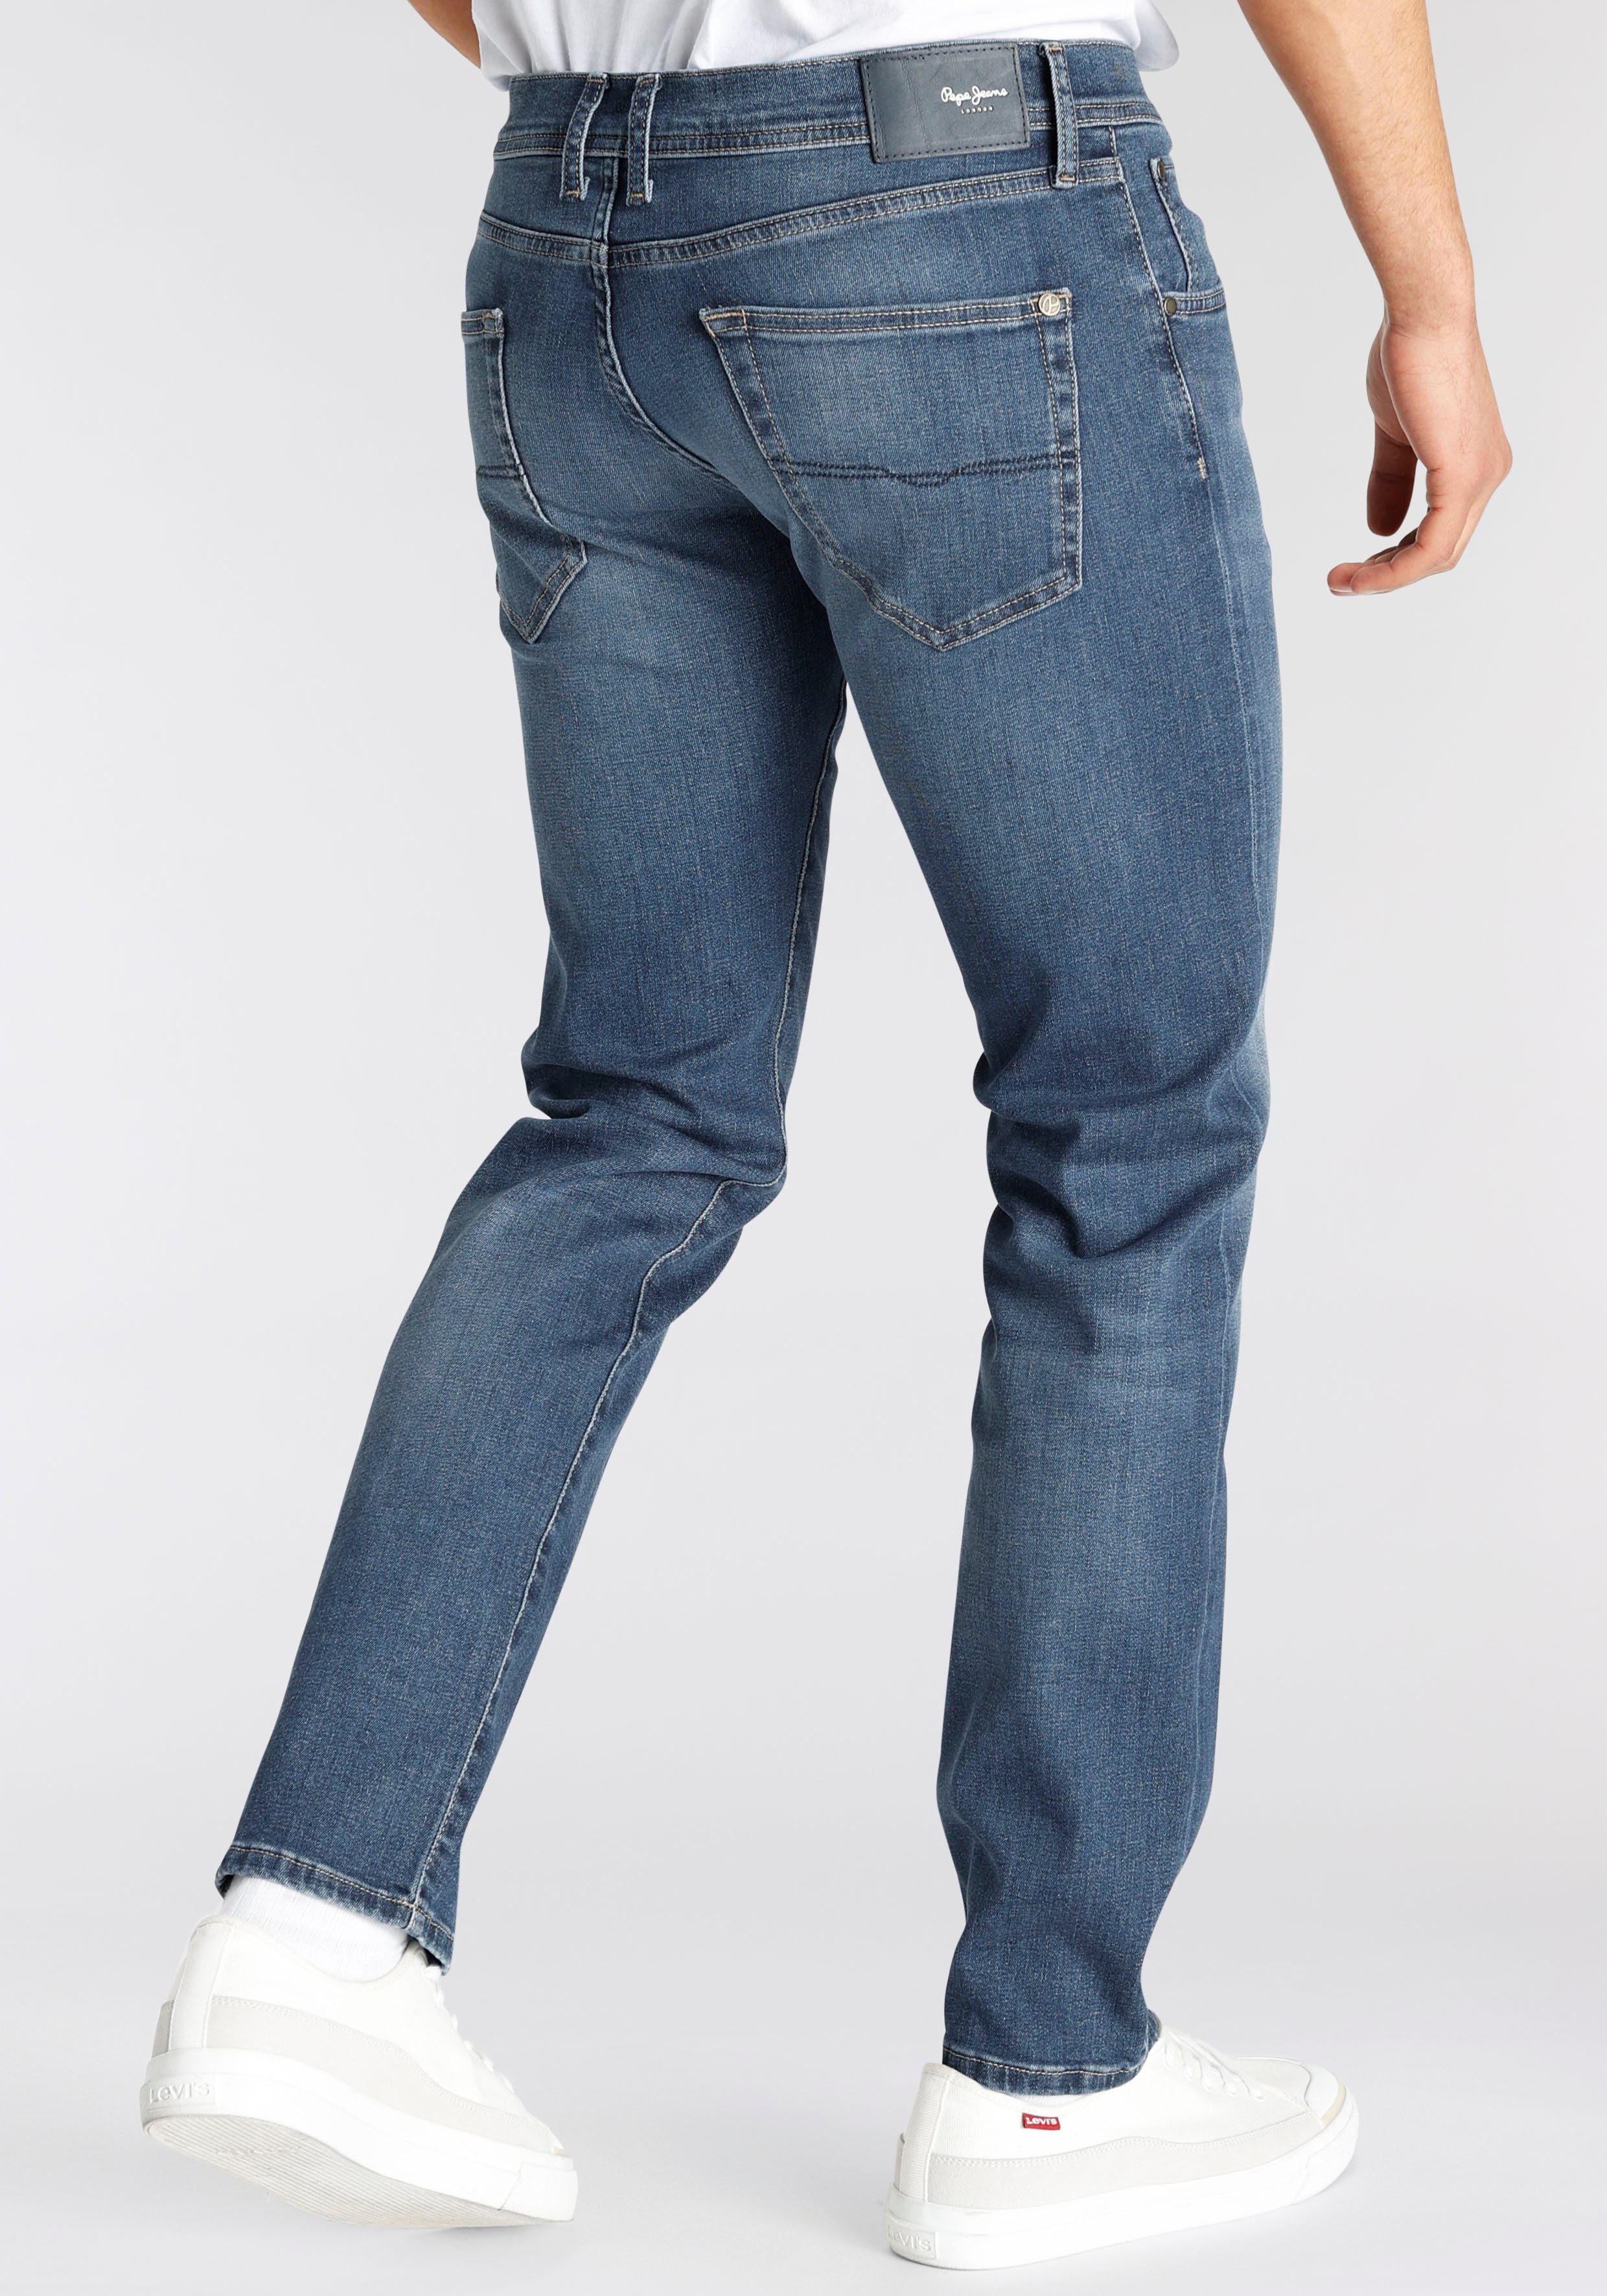 CANE Jeans Slim-fit-Jeans blue medium Pepe